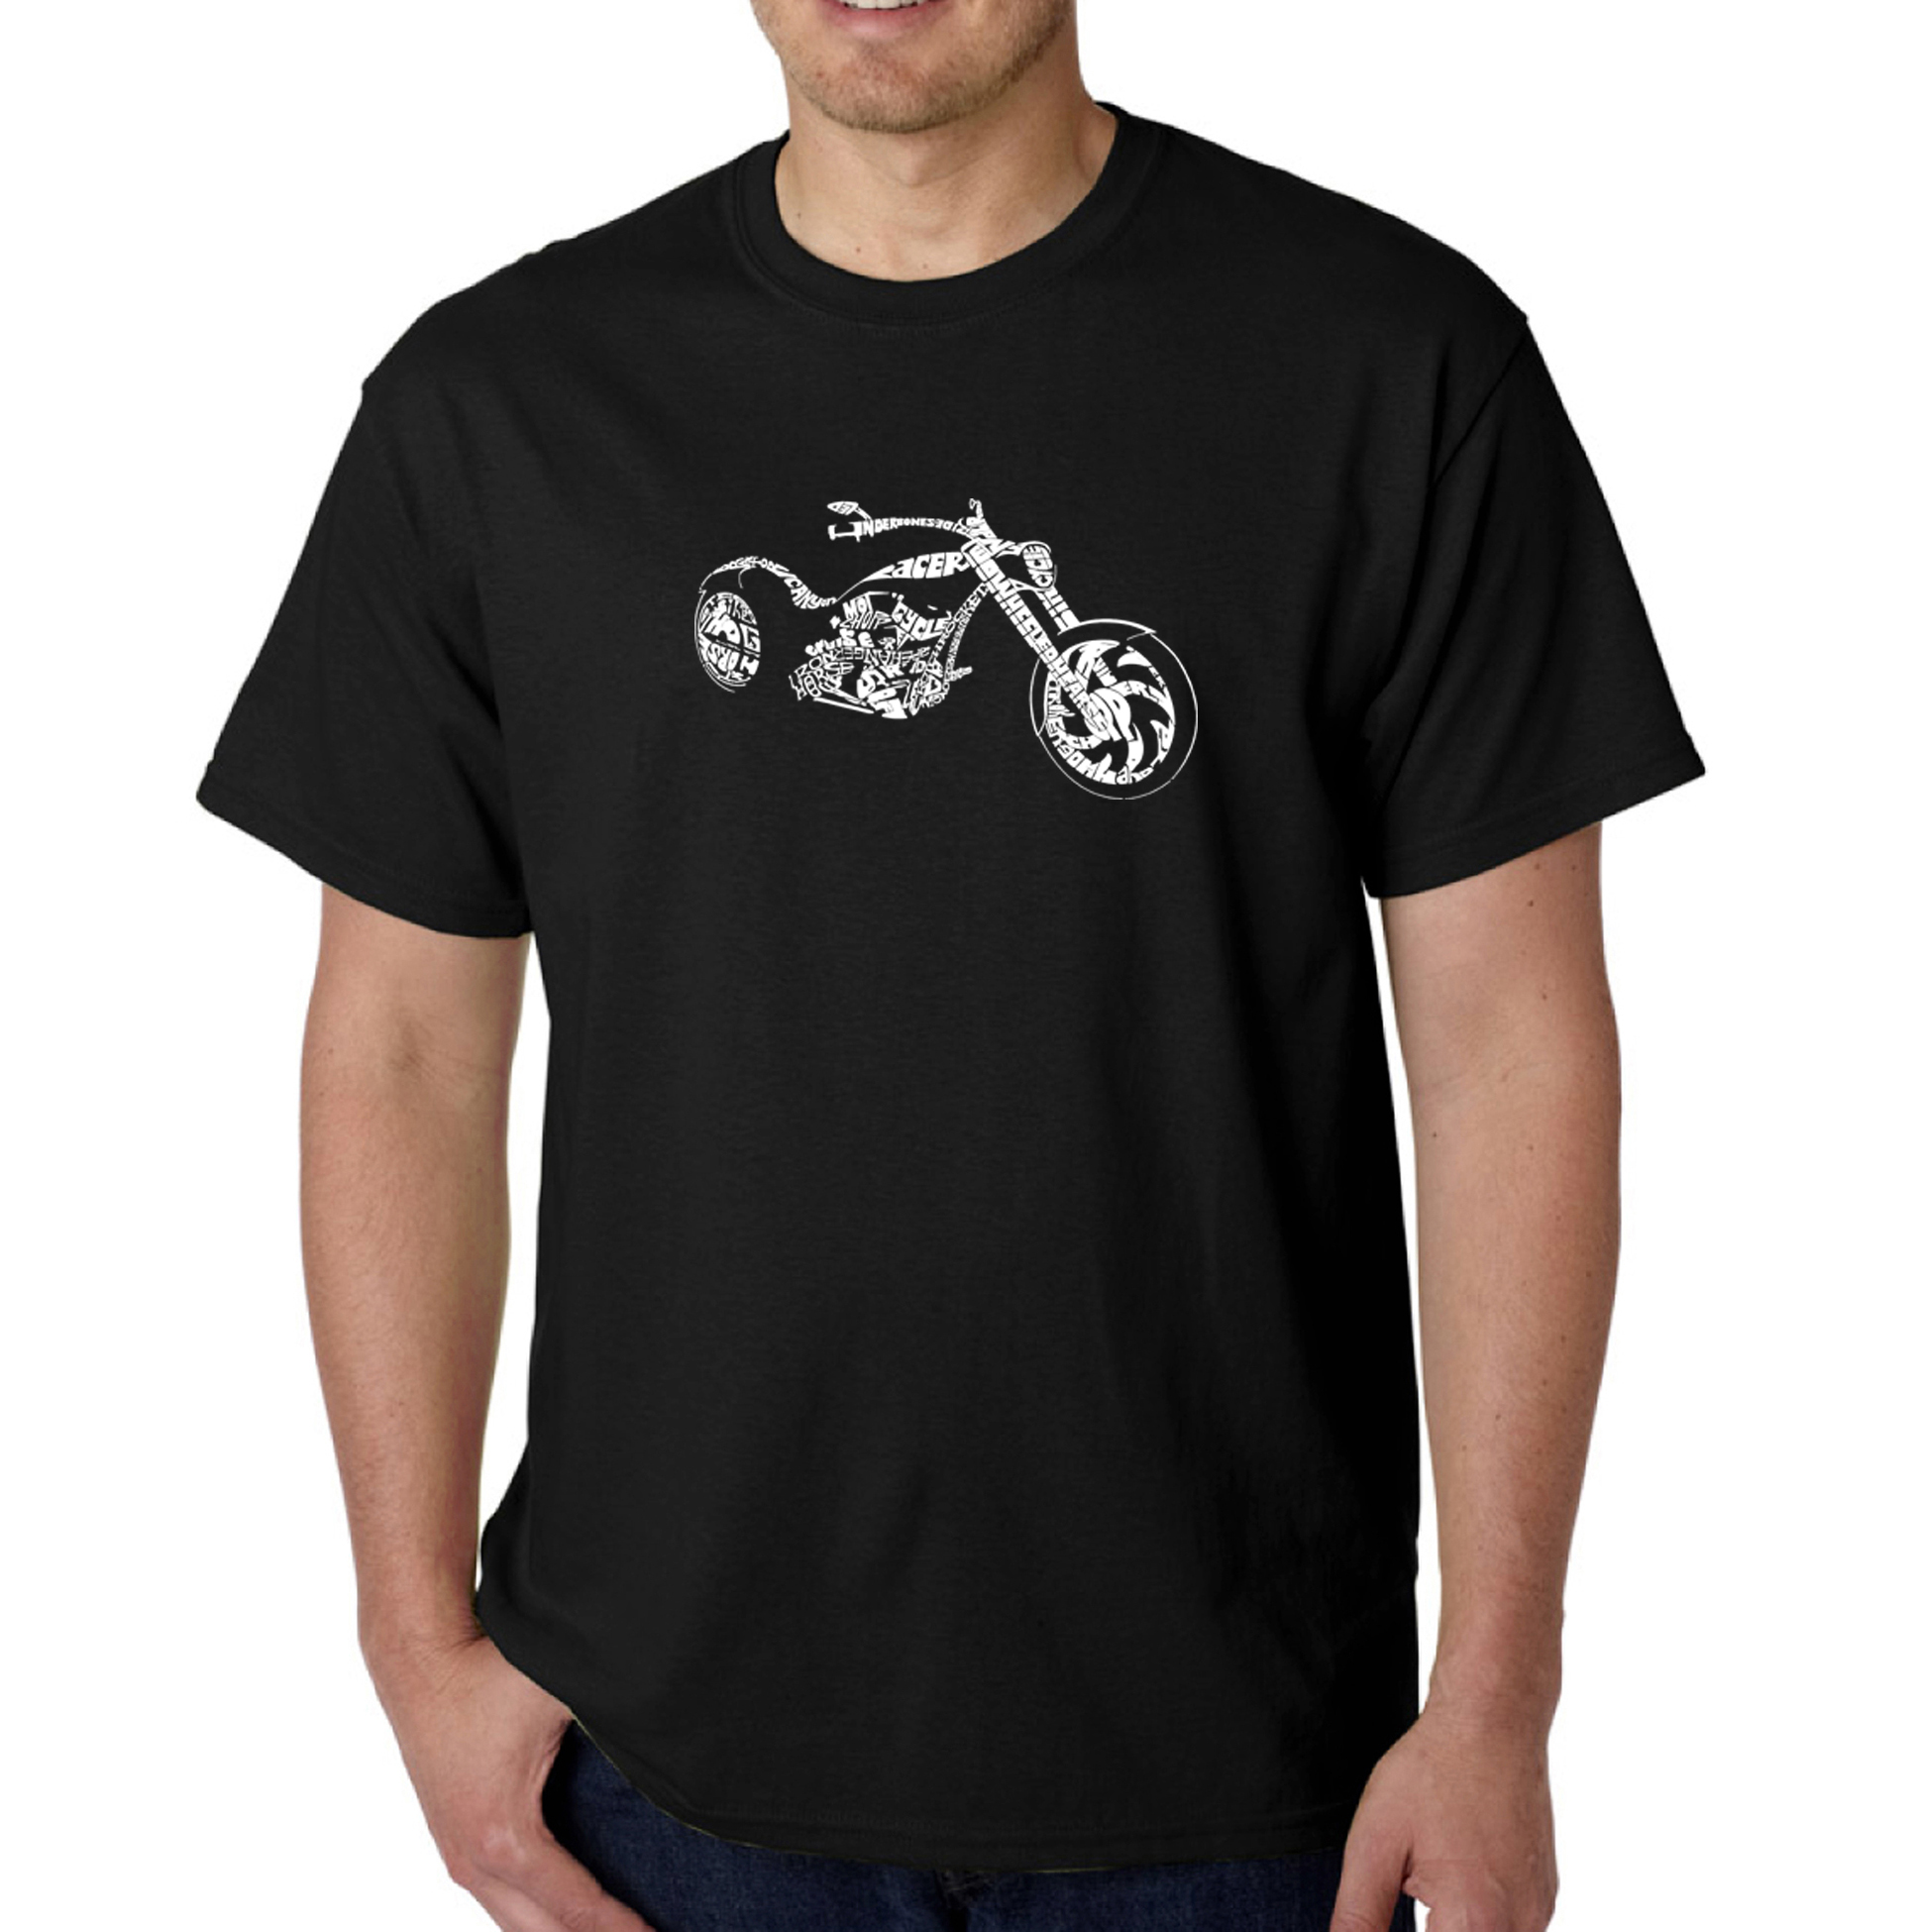 Los Angeles Pop Art Men's Word Art T-Shirt - Motorcycle